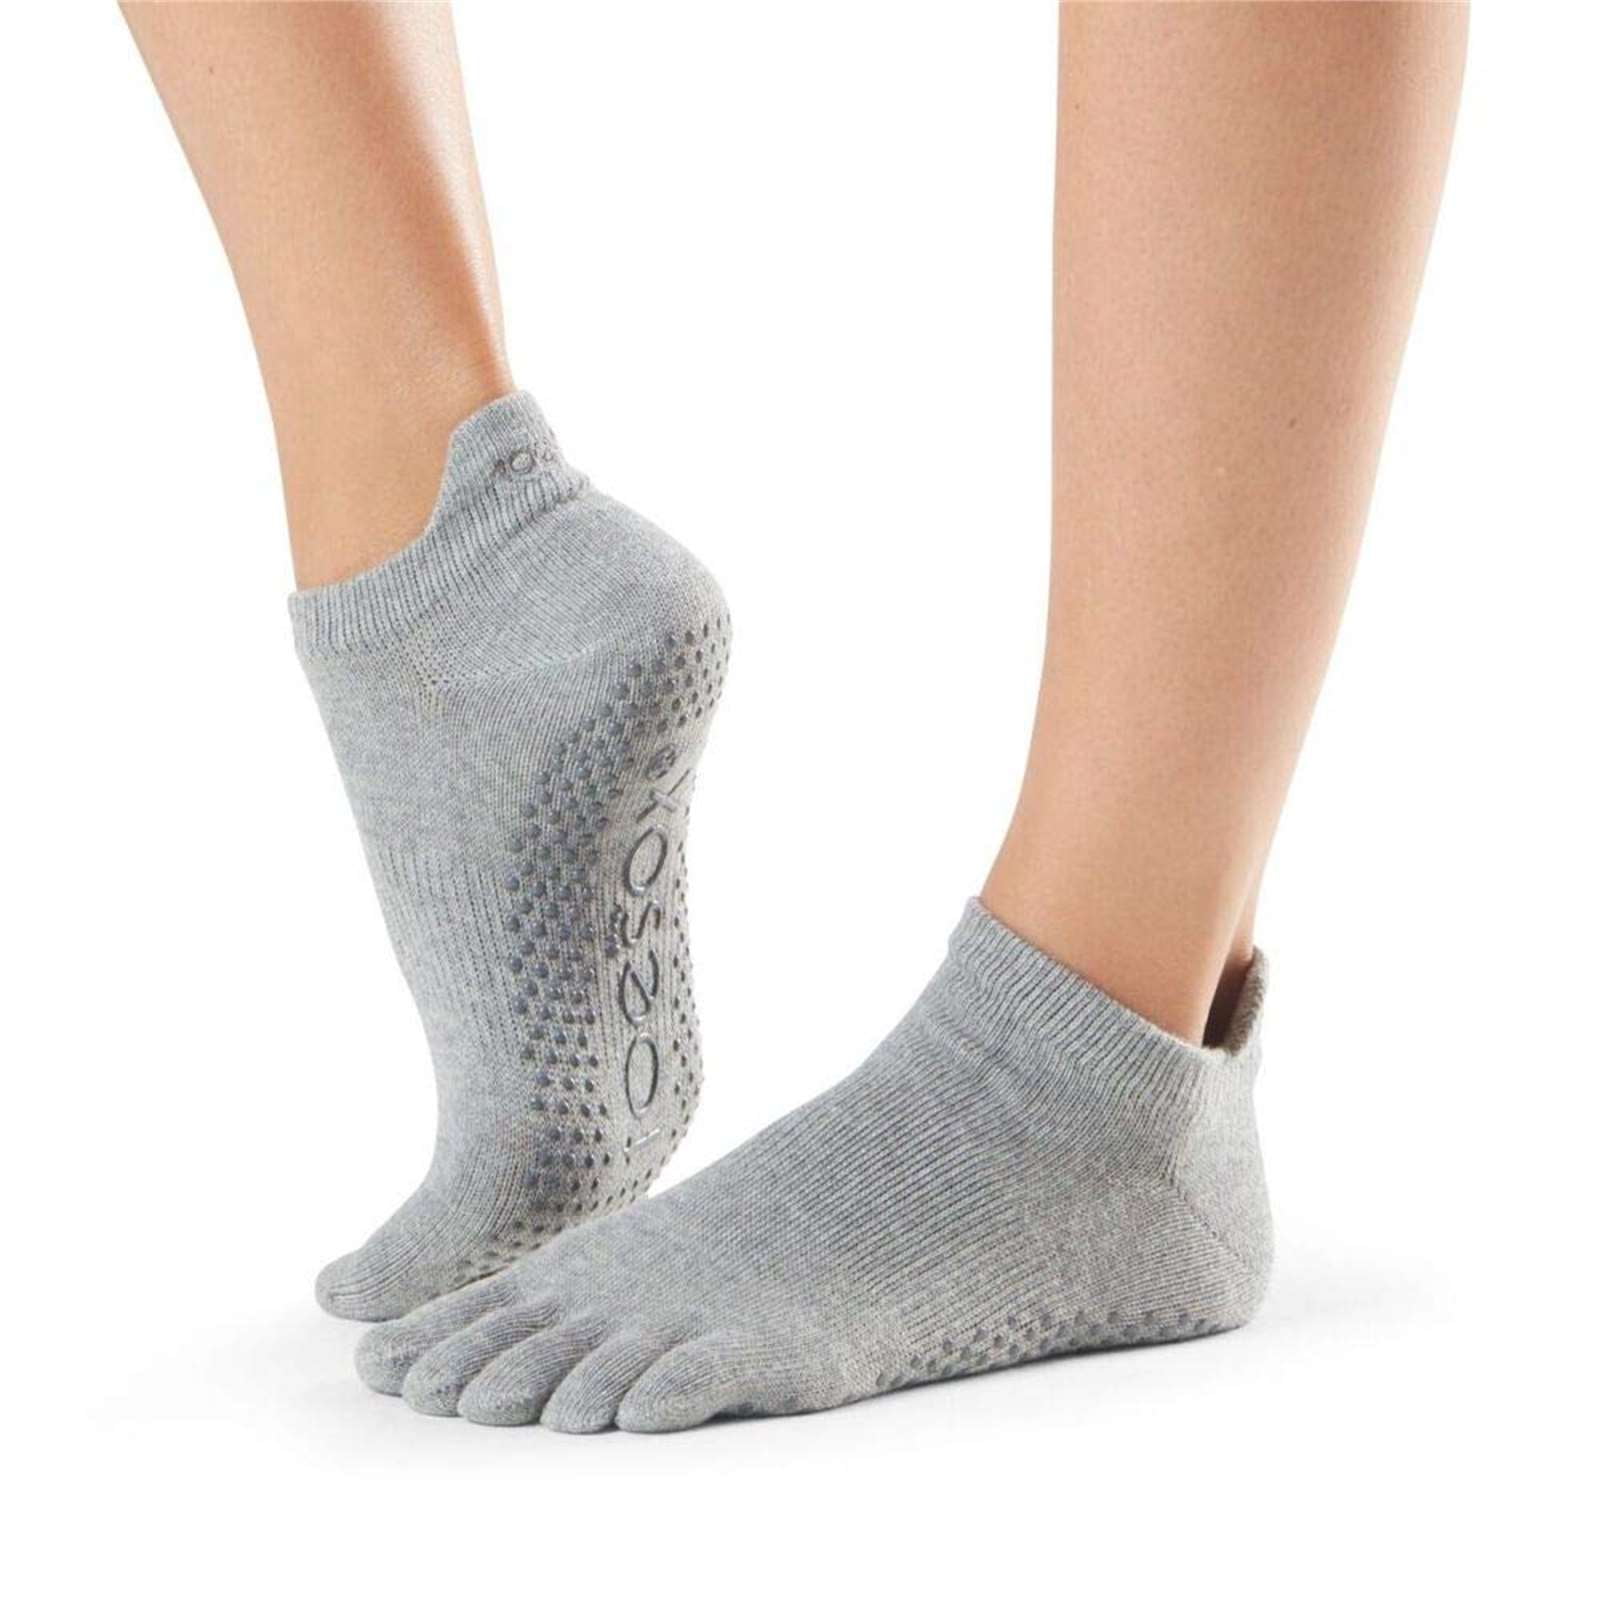 Toesox Unisex Adult Releve Dance Half Toe Socks